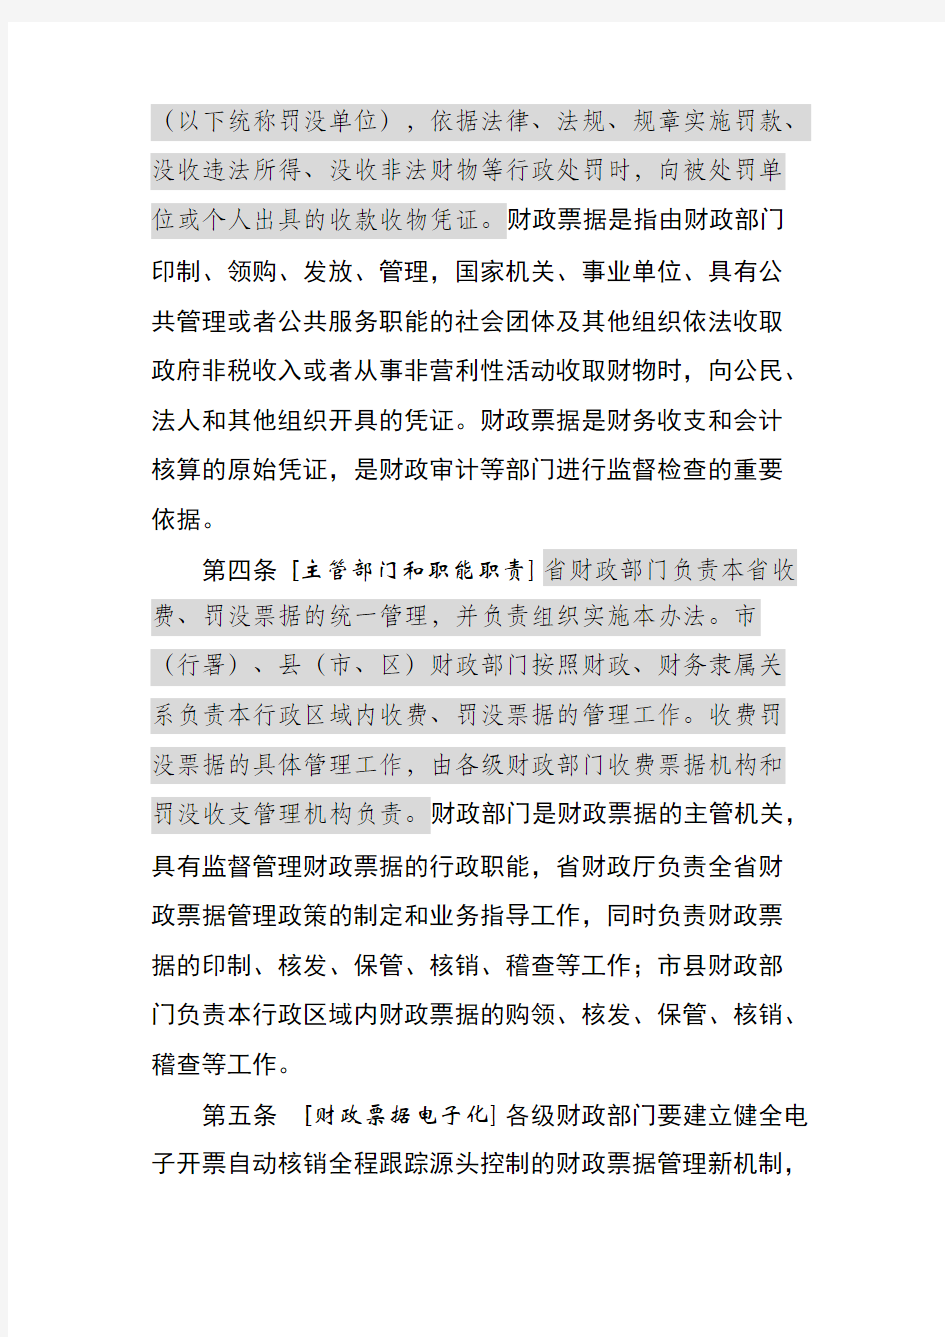 Removed_黑龙江省财政票据管理办法